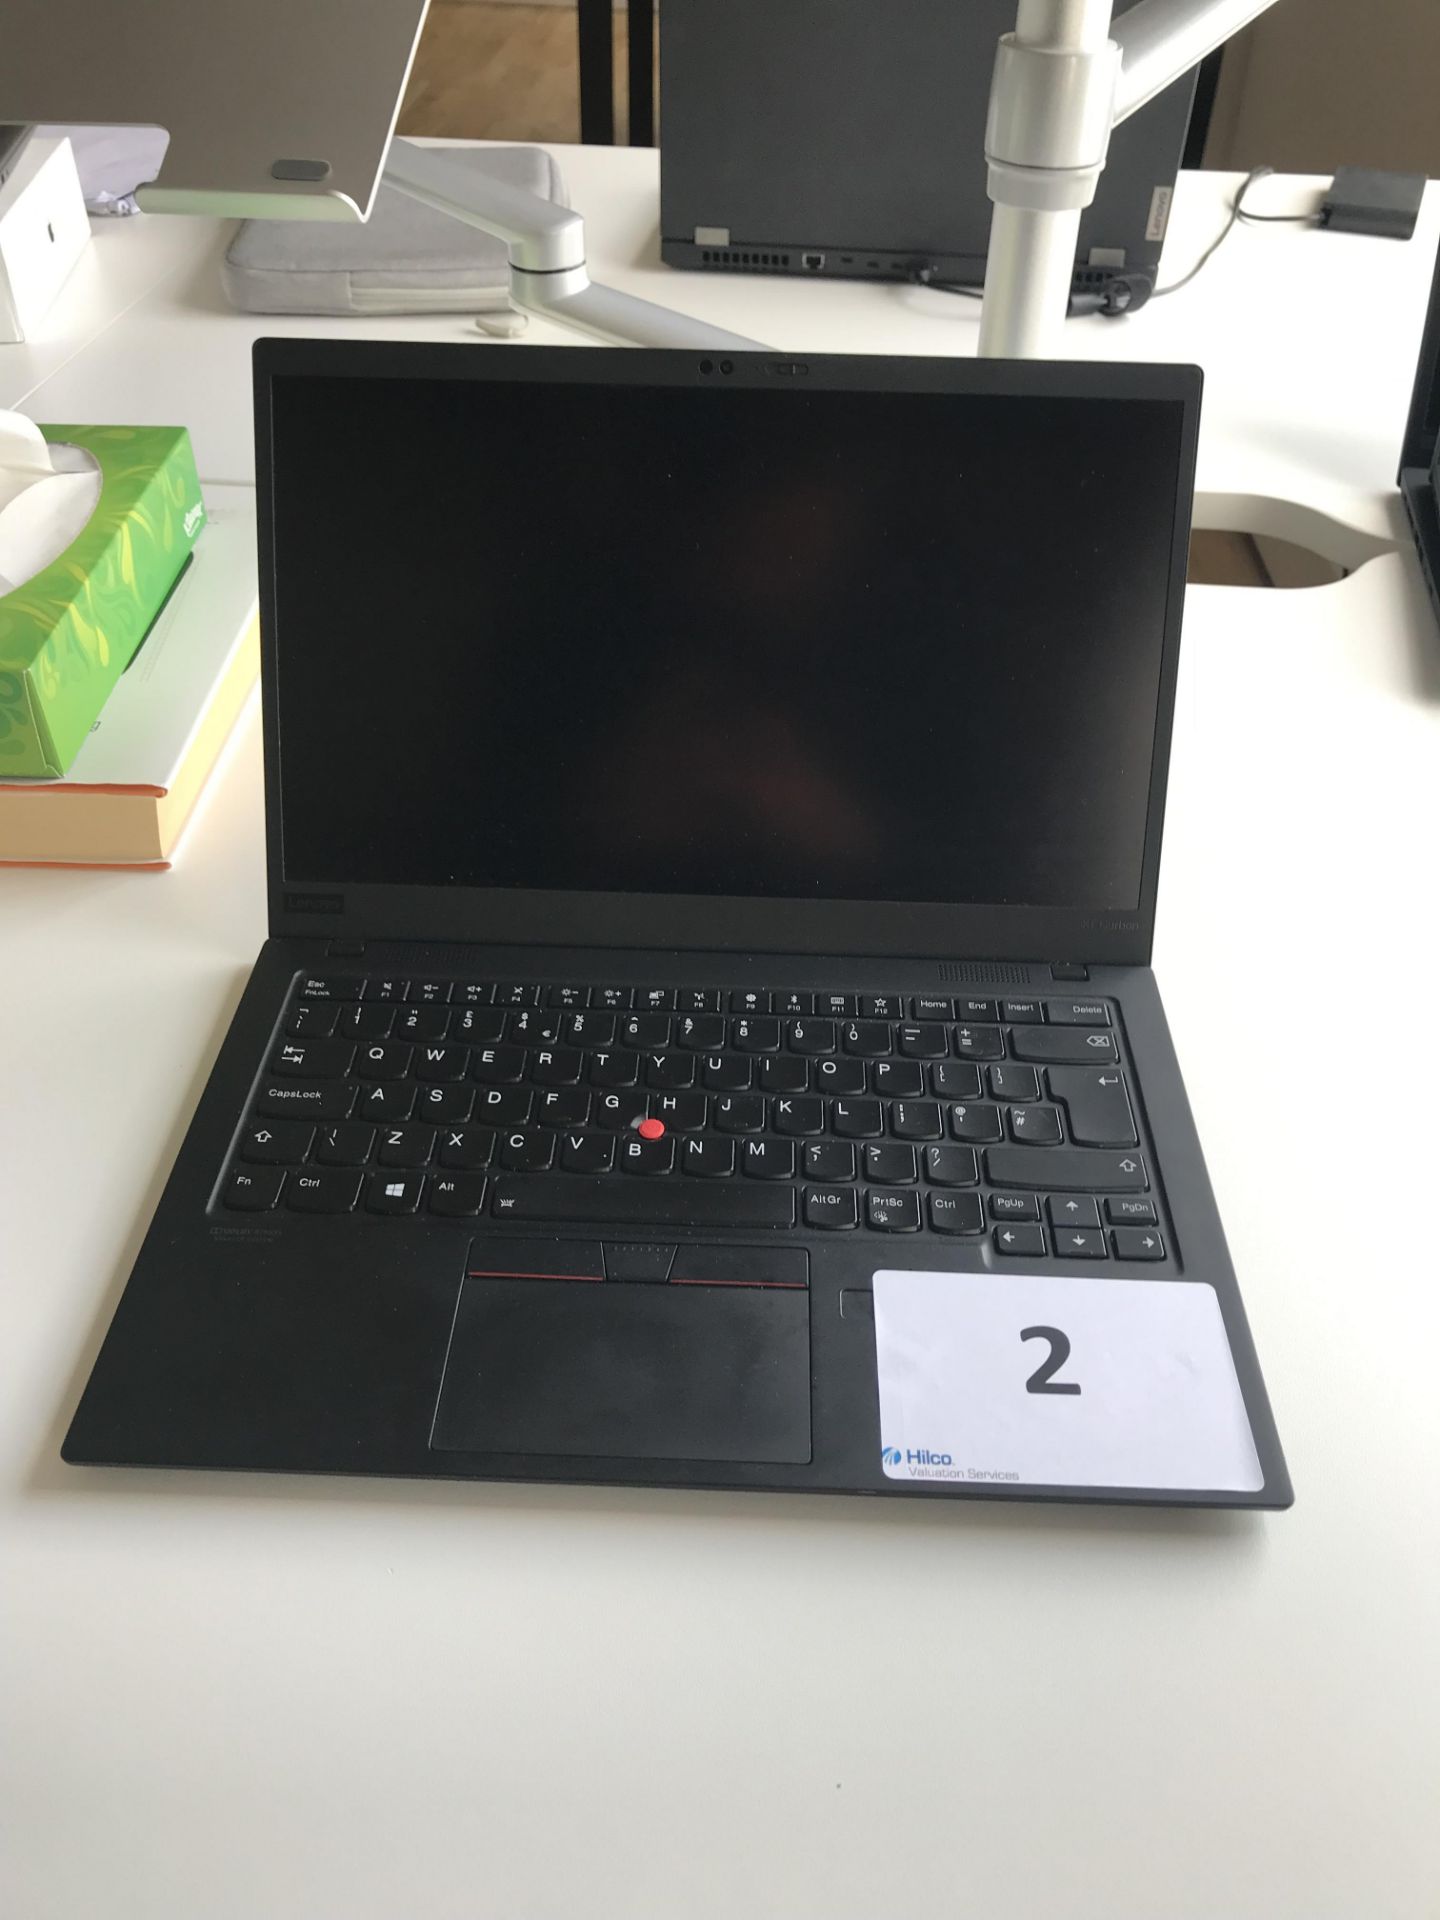 1, Lenovo X1 Carbon Thinkpad 8th Gen Laptop. Serial No. PF-IZDGTZ (2019)